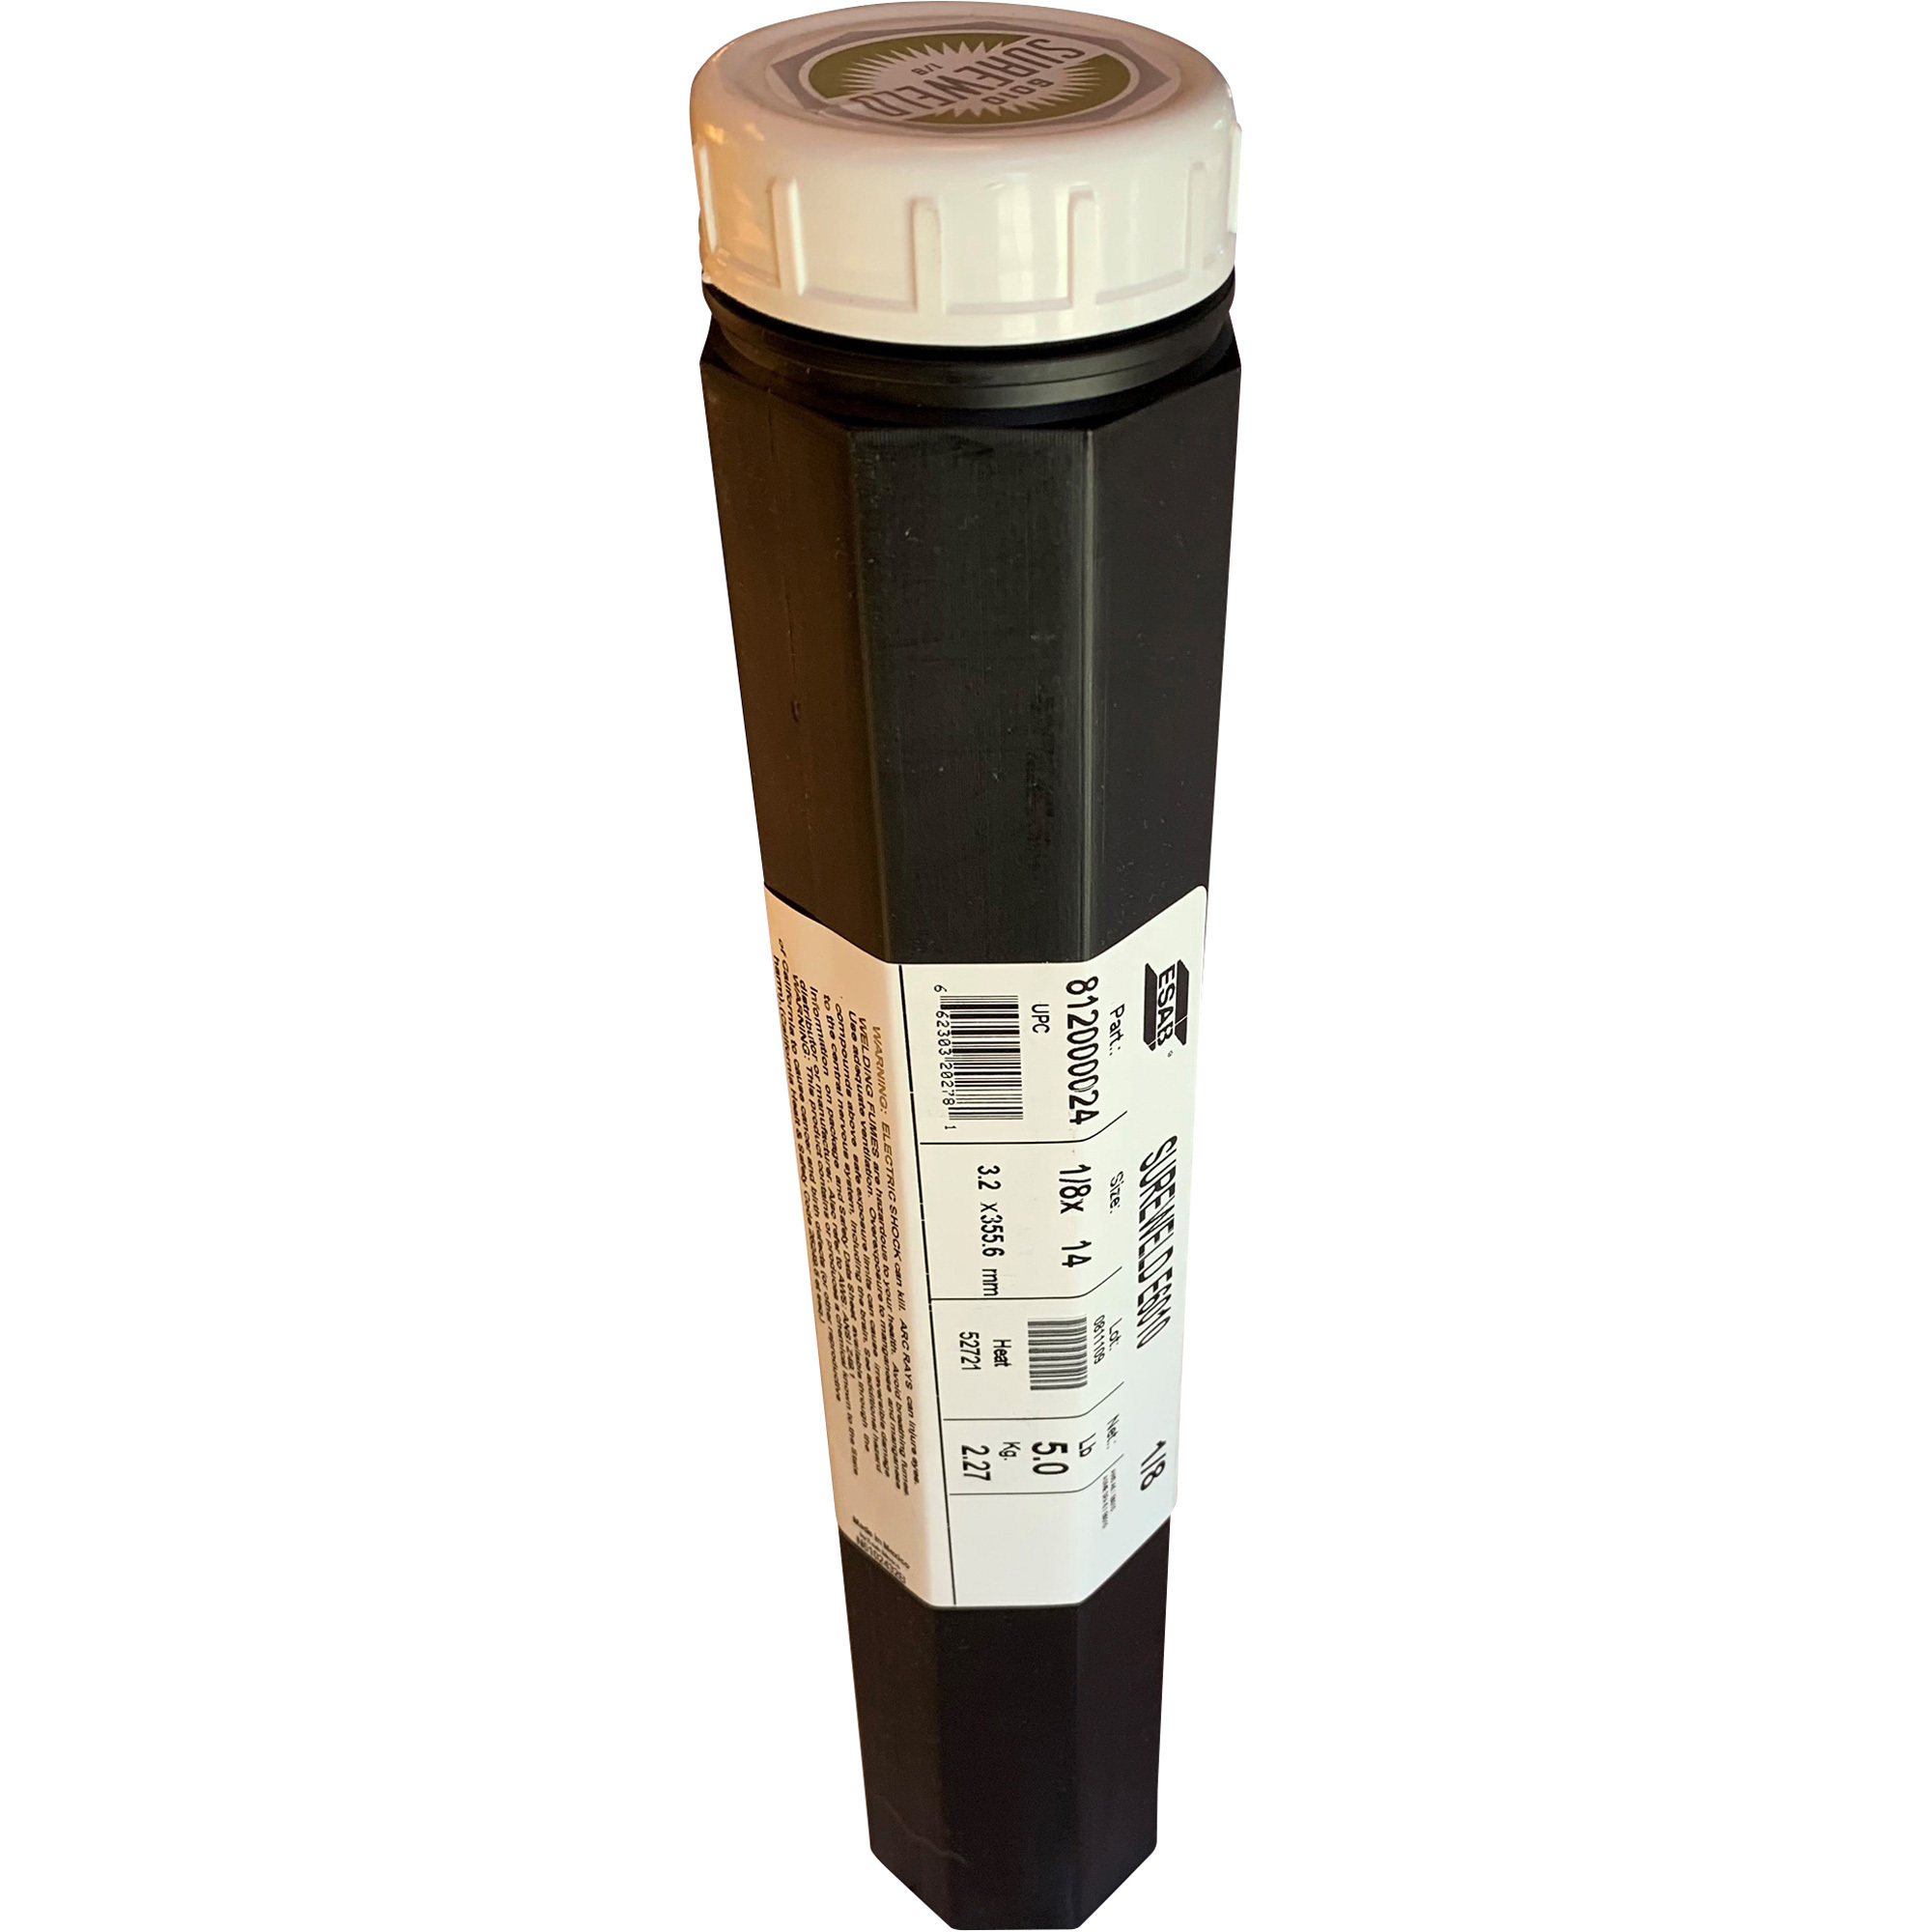 ESAB Sureweld E6010 Stick Electrodes â 1/8Inch Diameter x 14Inch L, 5-Lb. Tube, Model 812000024